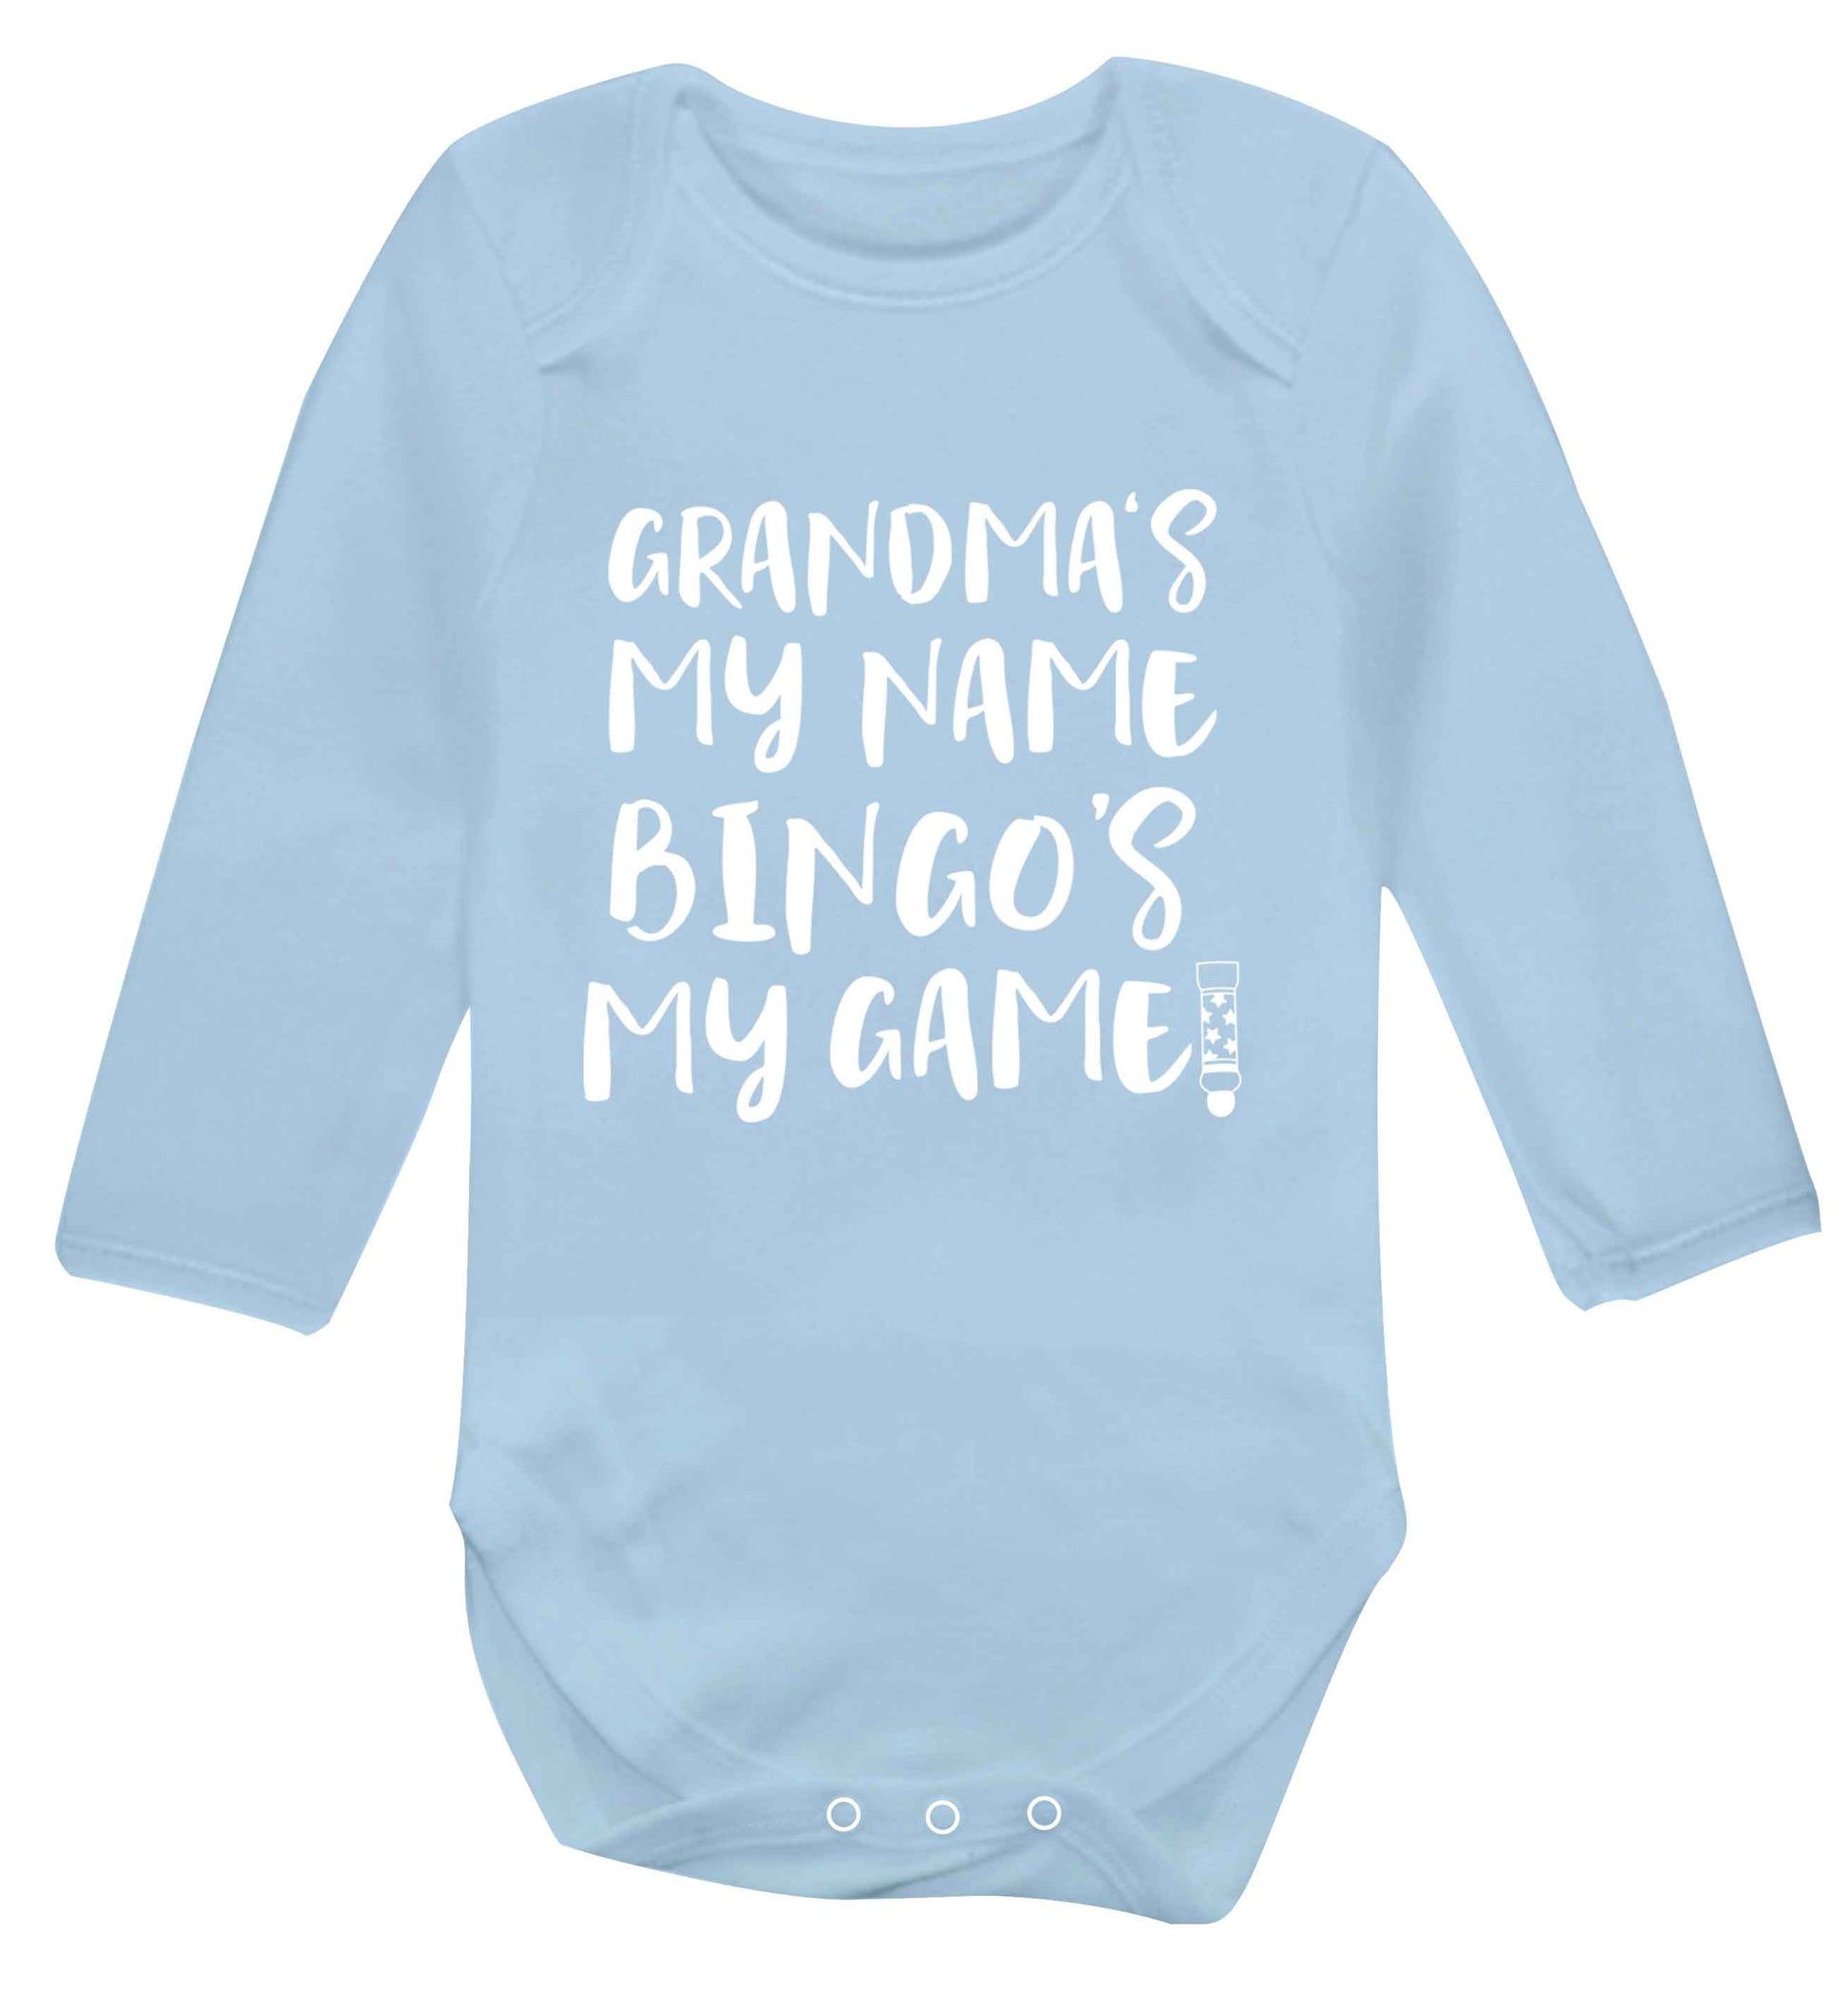 Grandma's my name bingo's my game! Baby Vest long sleeved pale blue 6-12 months